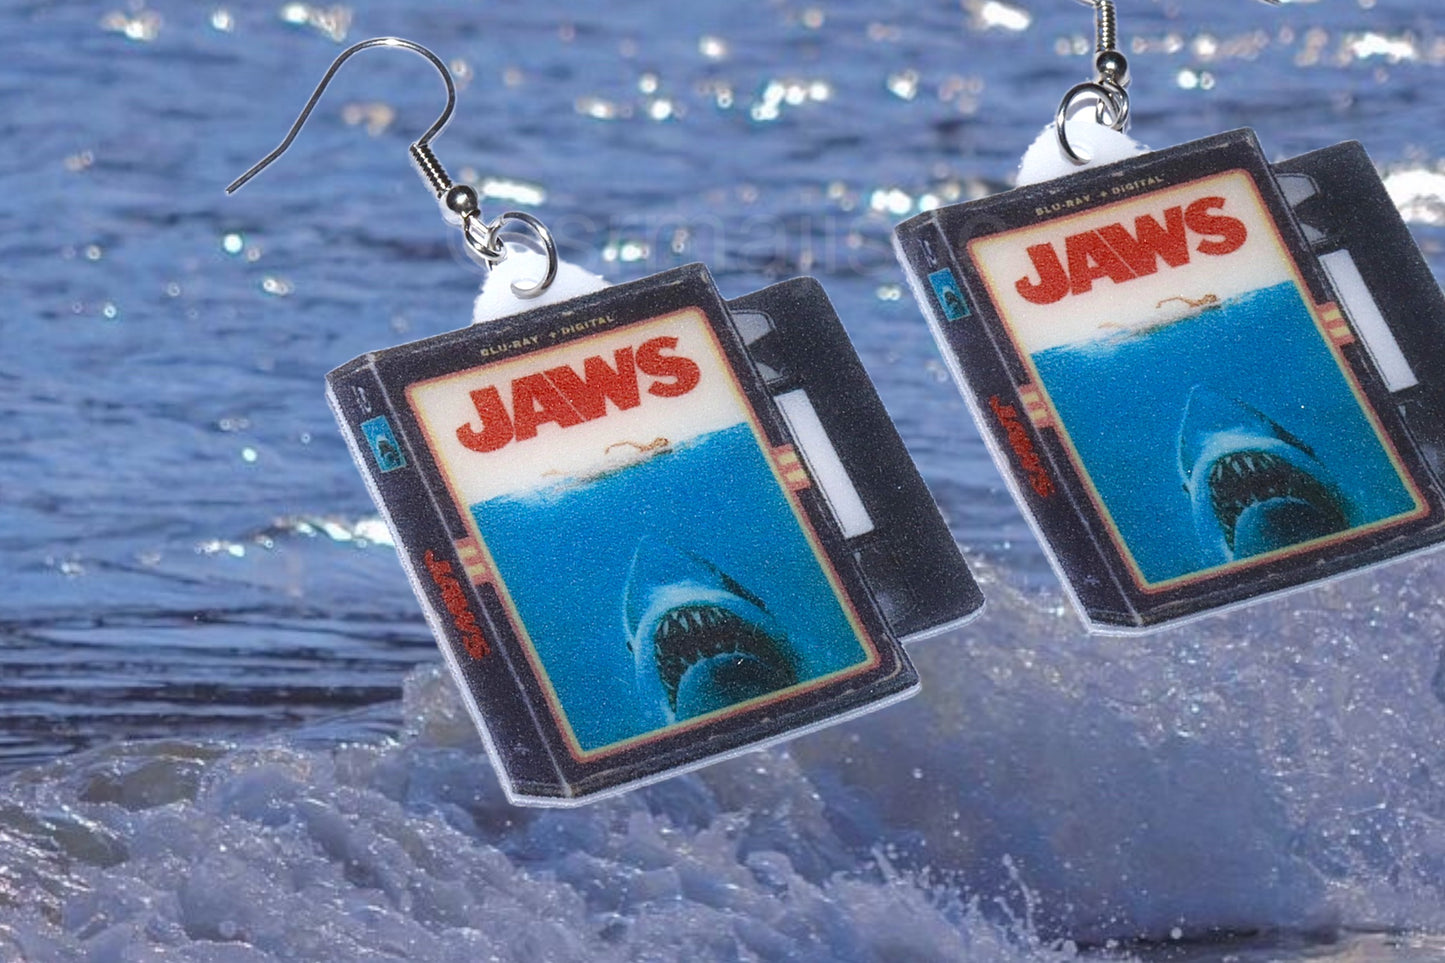 Jaws (1975) Movie VHS Tape 2D detailed Handmade Earrings!